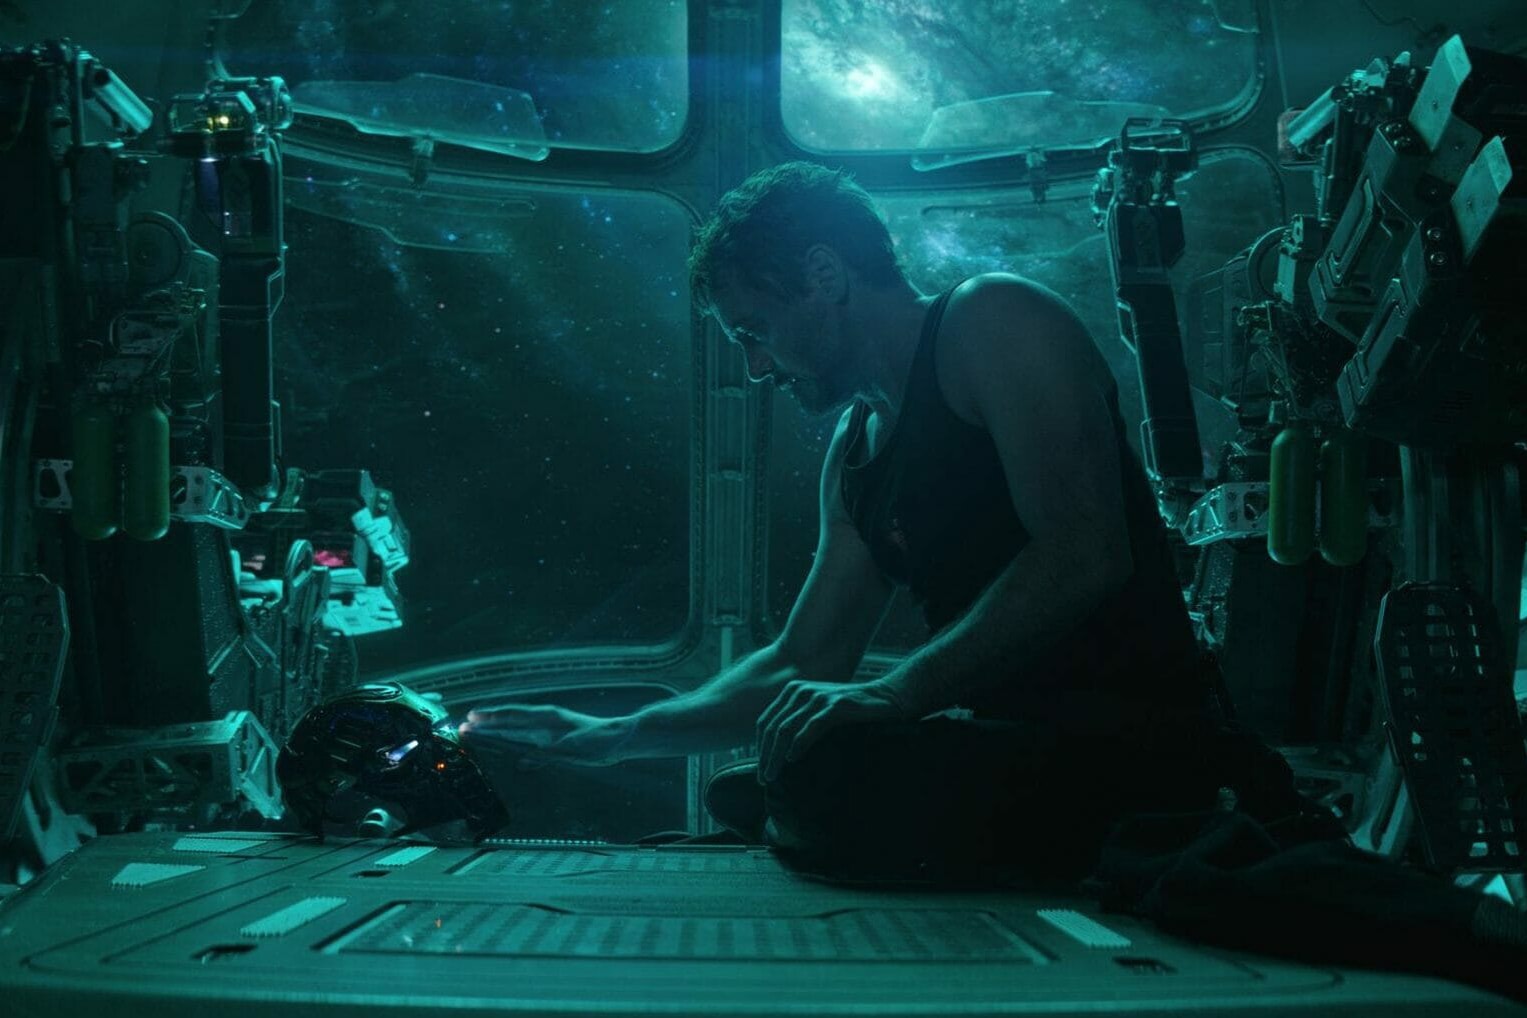 ‘Avengers: Endgame’ Oscar Campaign for Robert Downey Jr. marvel comics studios cinematic universe films academy awards ceremony